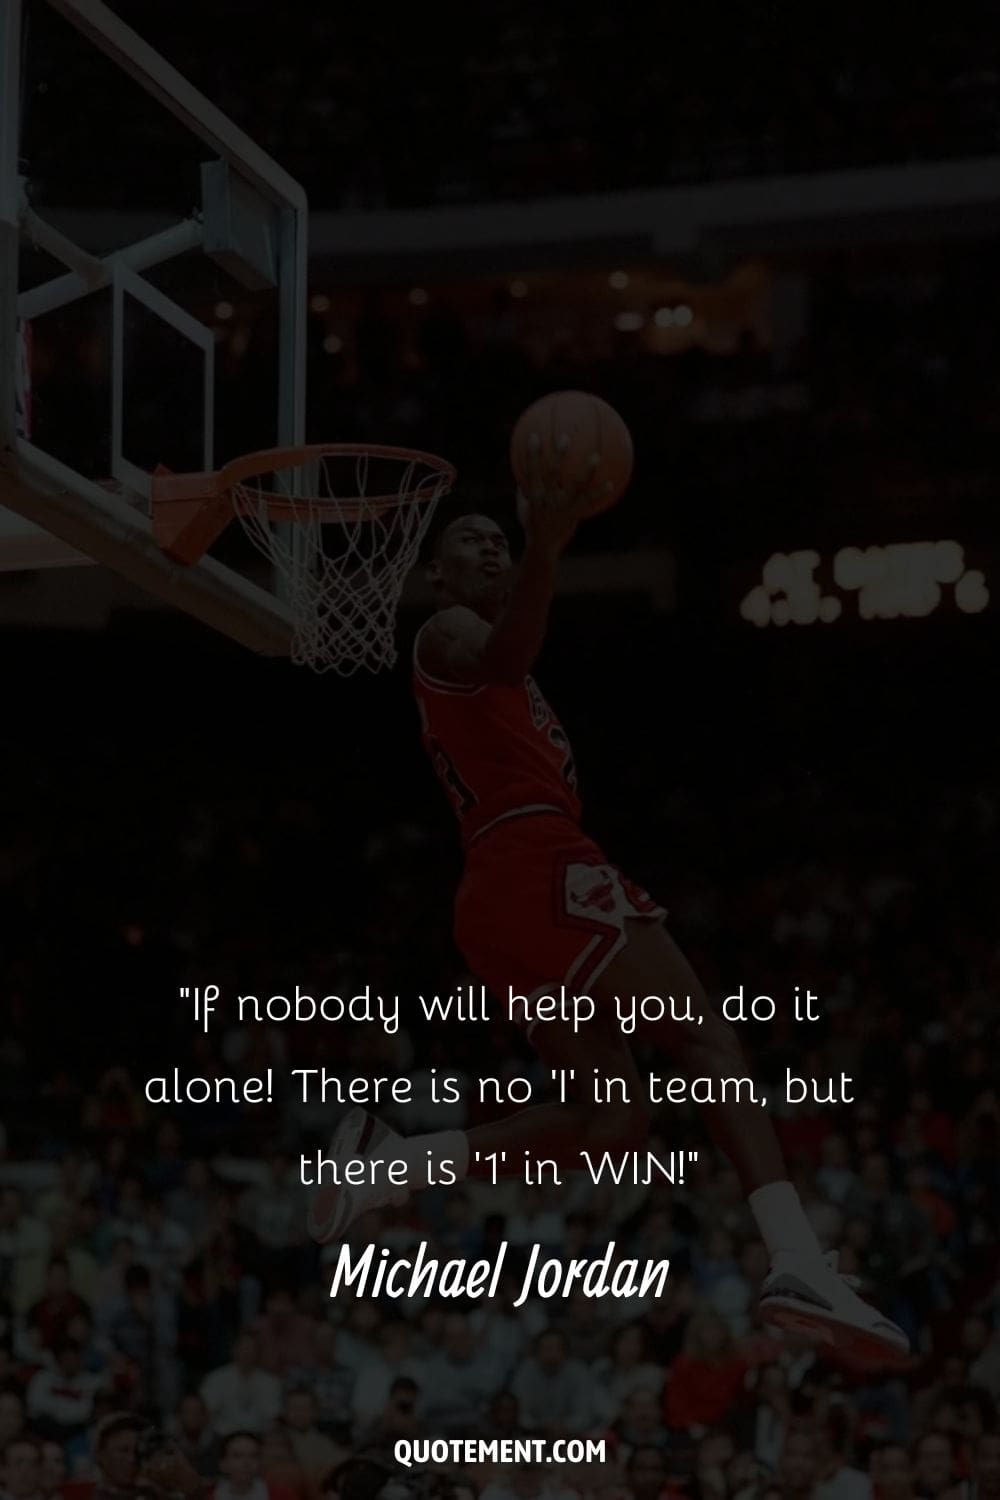 Michael Jordan rises towards the basket